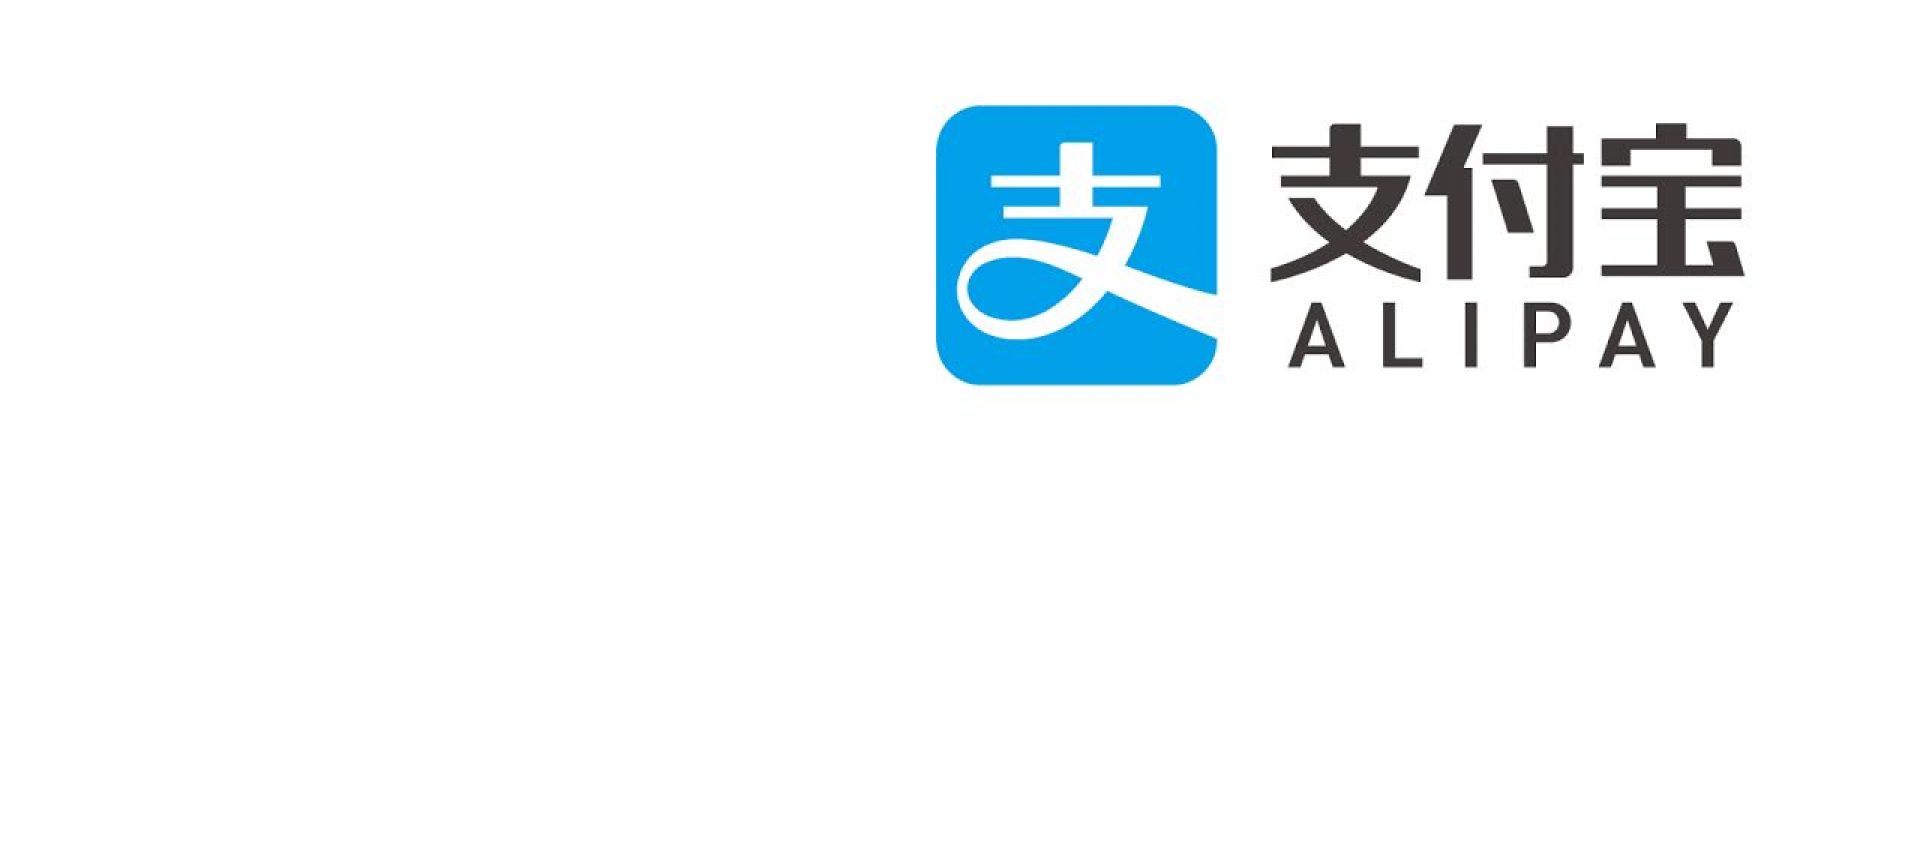 Alipay com. Alipay логотип. Алипей иконка. Алипей логотип иконка. Alipay логотип без фона.